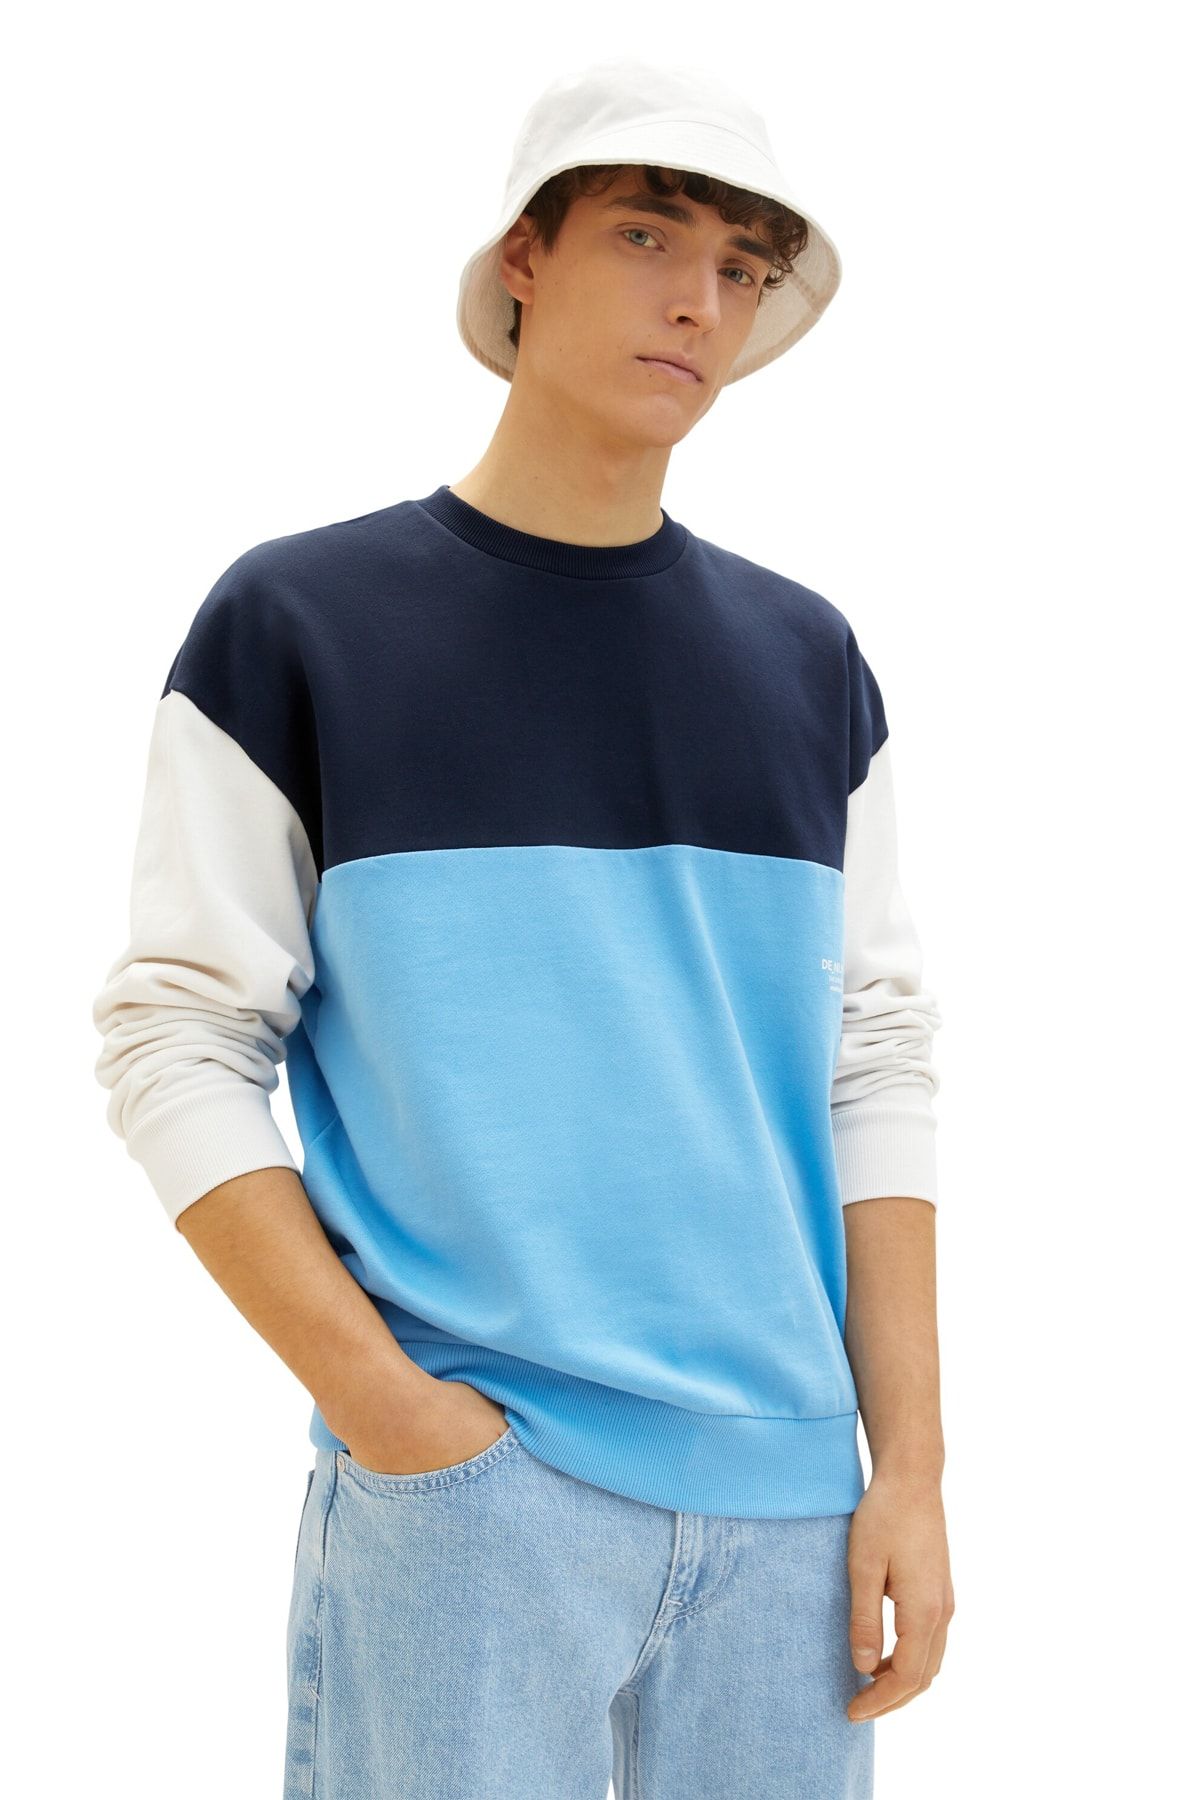 Tom Tailor Denim Sweatshirt - Blue - Regular fit - Trendyol